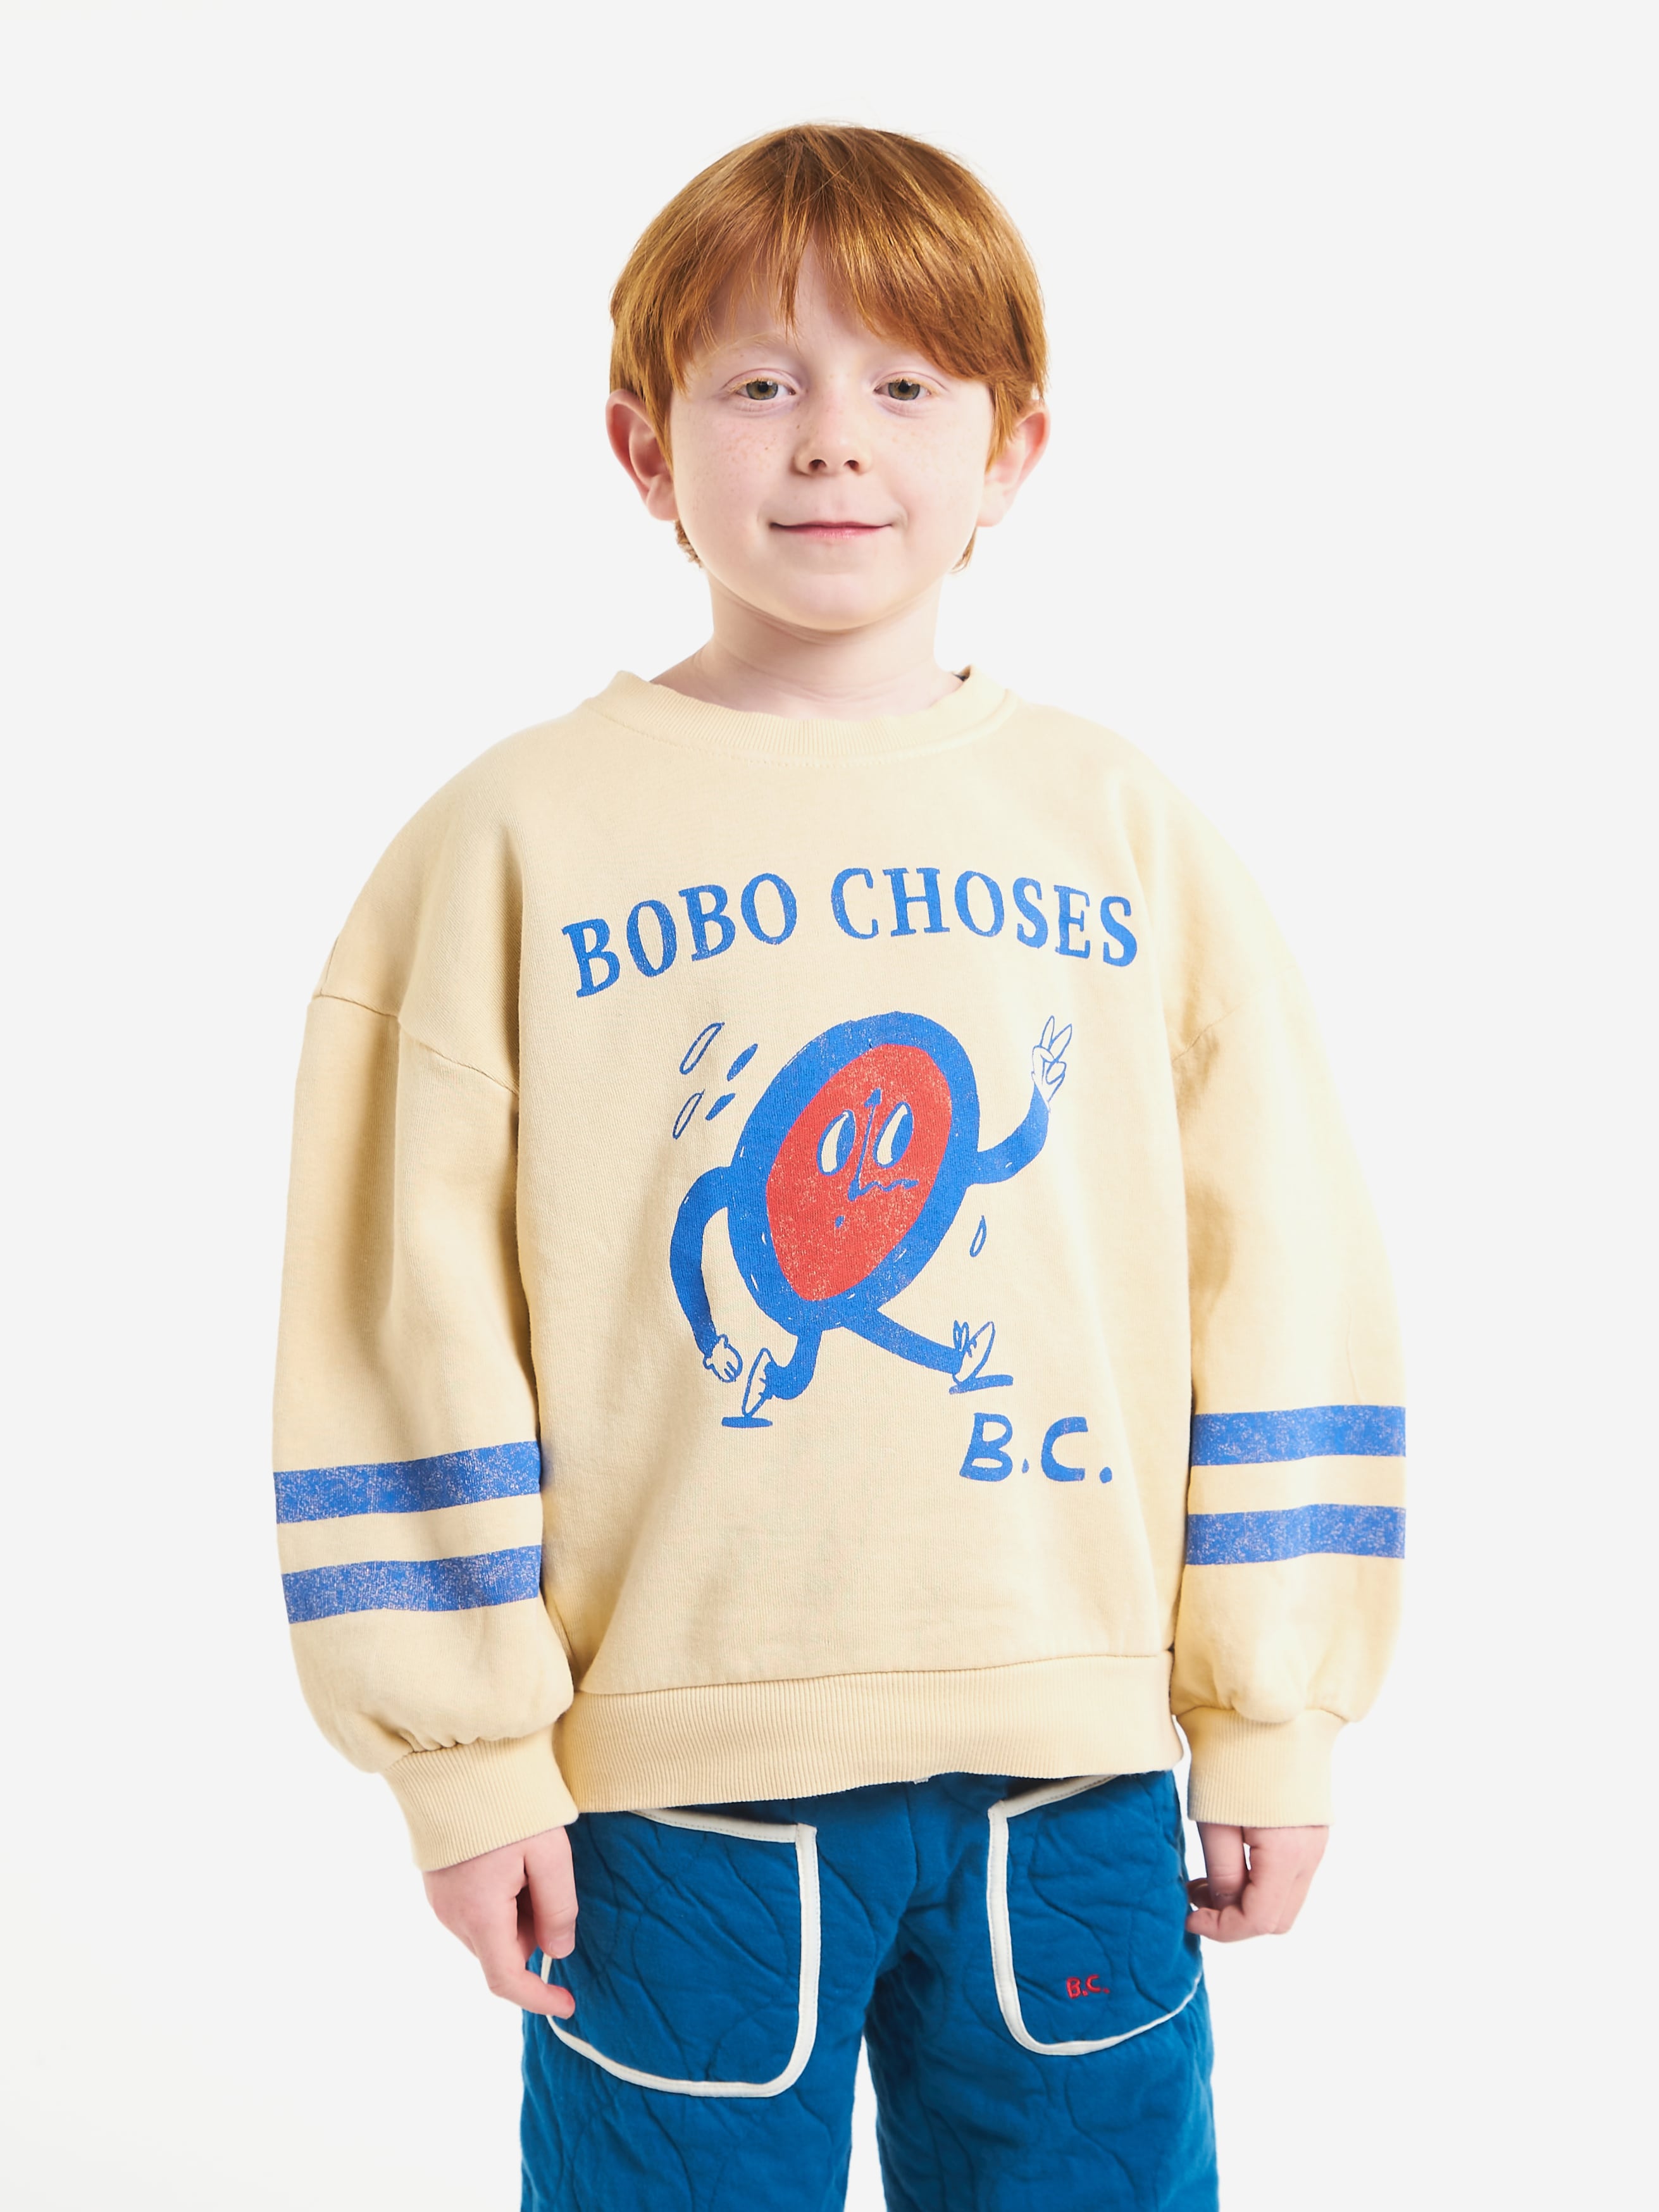 BOBO CHOSES / Walking Clock sweatshirt / Kids | HAKONIWA PRODUCTS ...